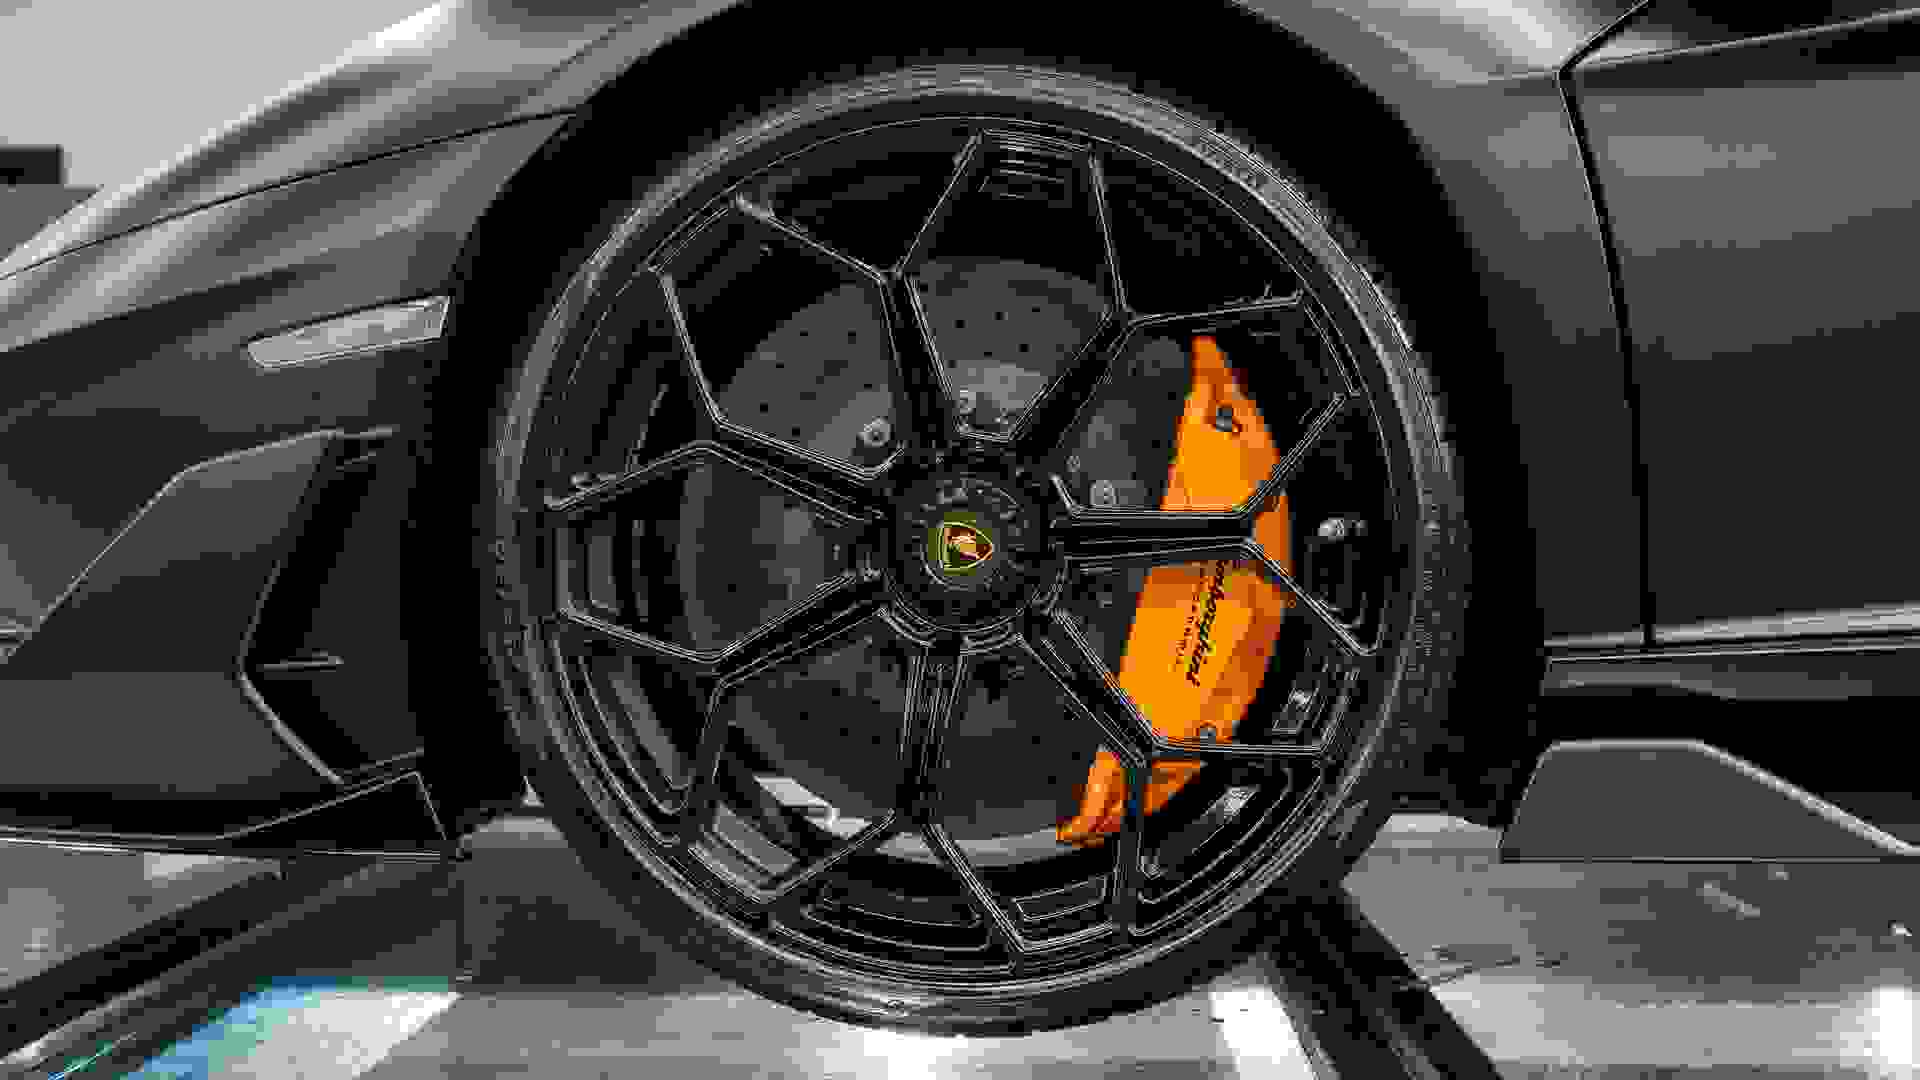 Lamborghini Aventador Photo 09c22b8c-d349-44d4-b861-6a3be3a96b7d.jpg